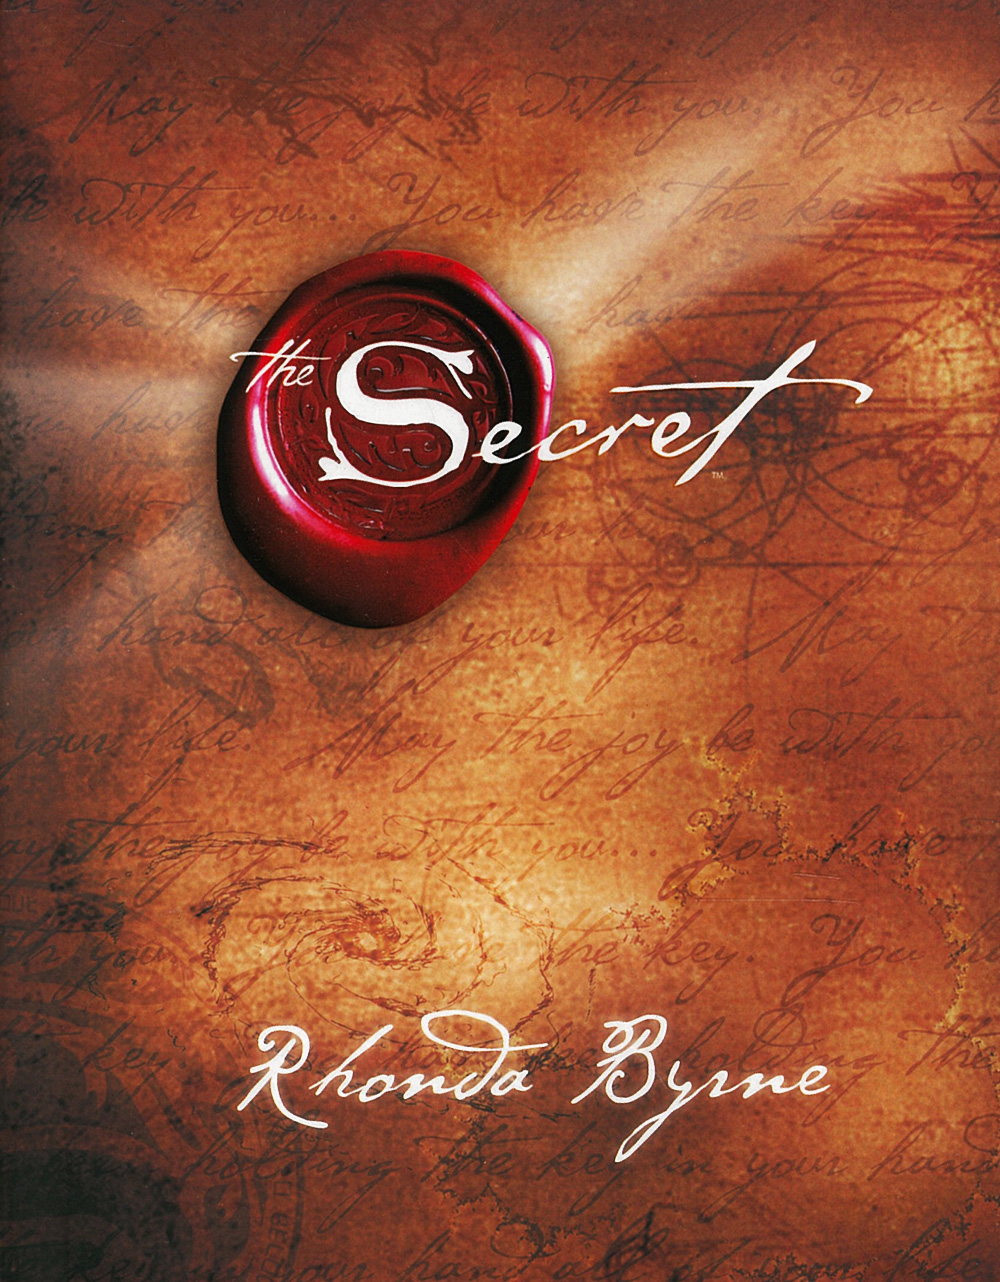 The Secret by Rhonda Byrne book cover